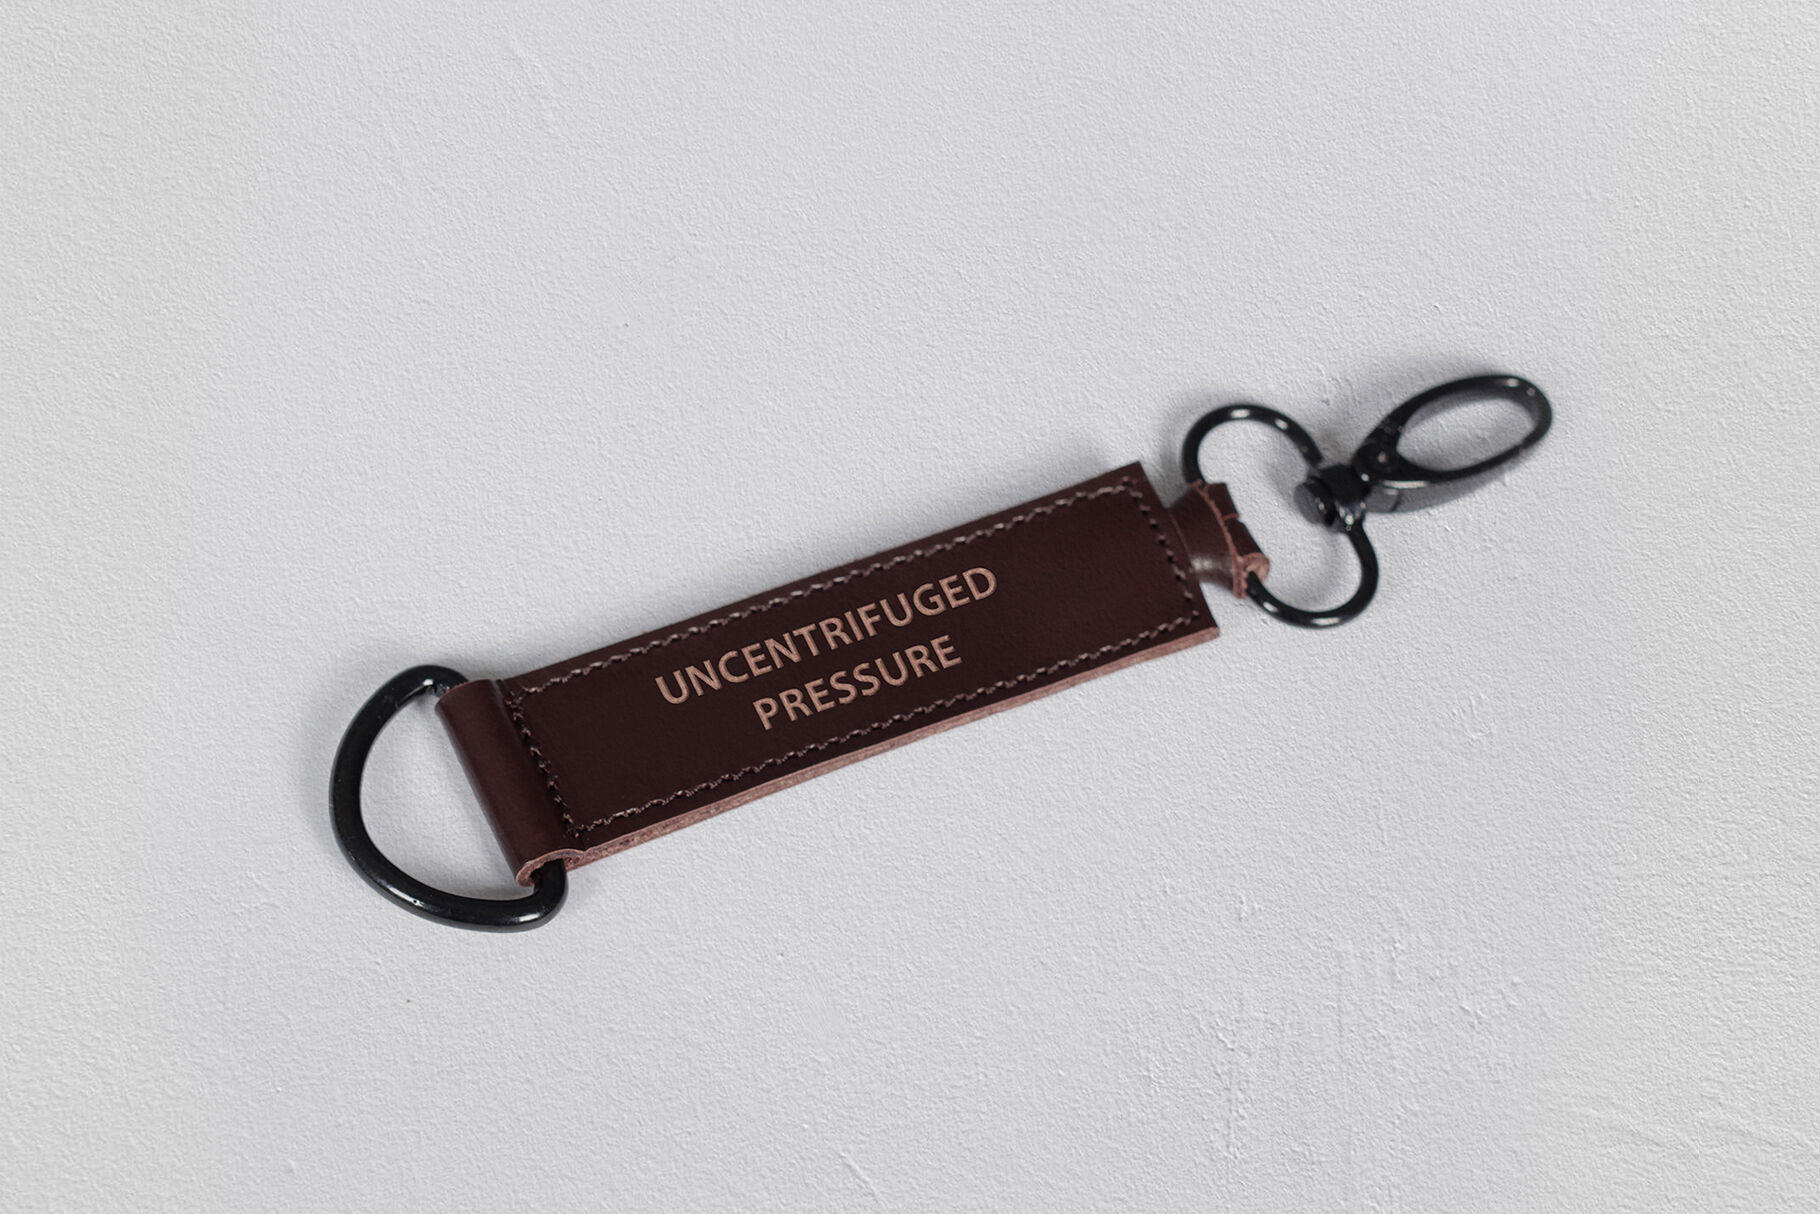 Keychain Mockup By Uncentrifuged Pressure | TheHungryJPEG